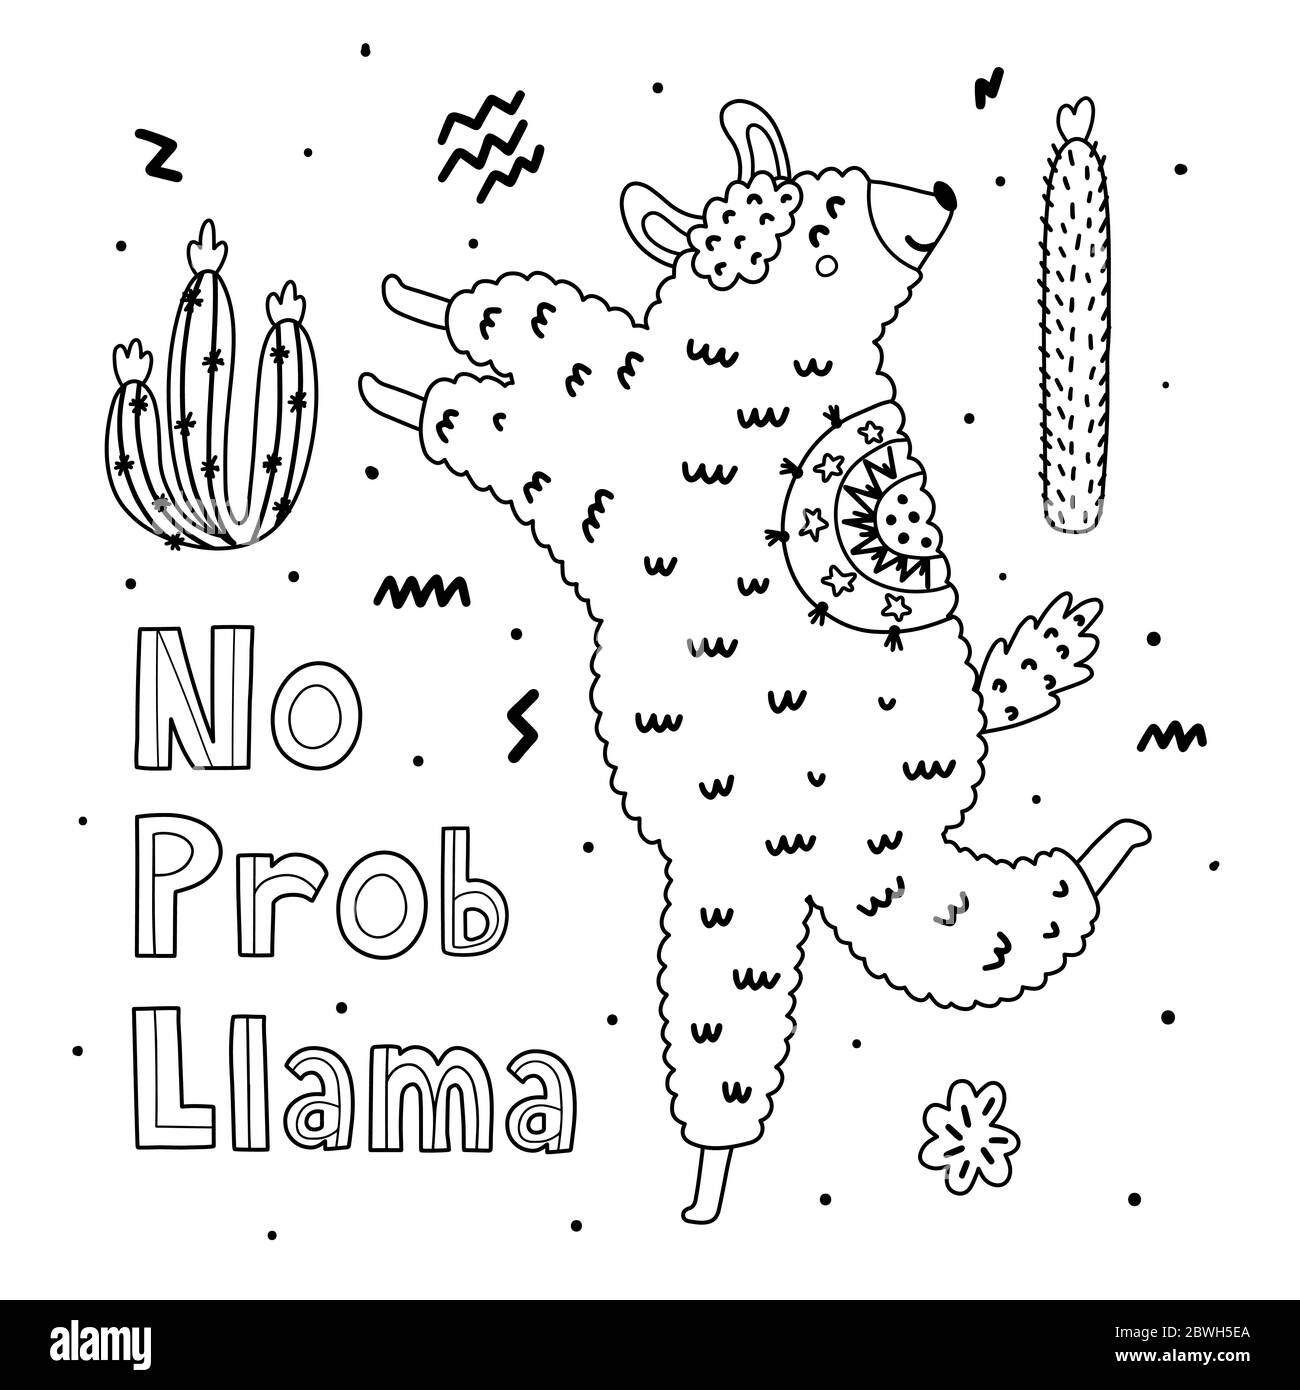 Kein Prob Llama Malvorlagen mit lustigen Alpaka Stock Vektor